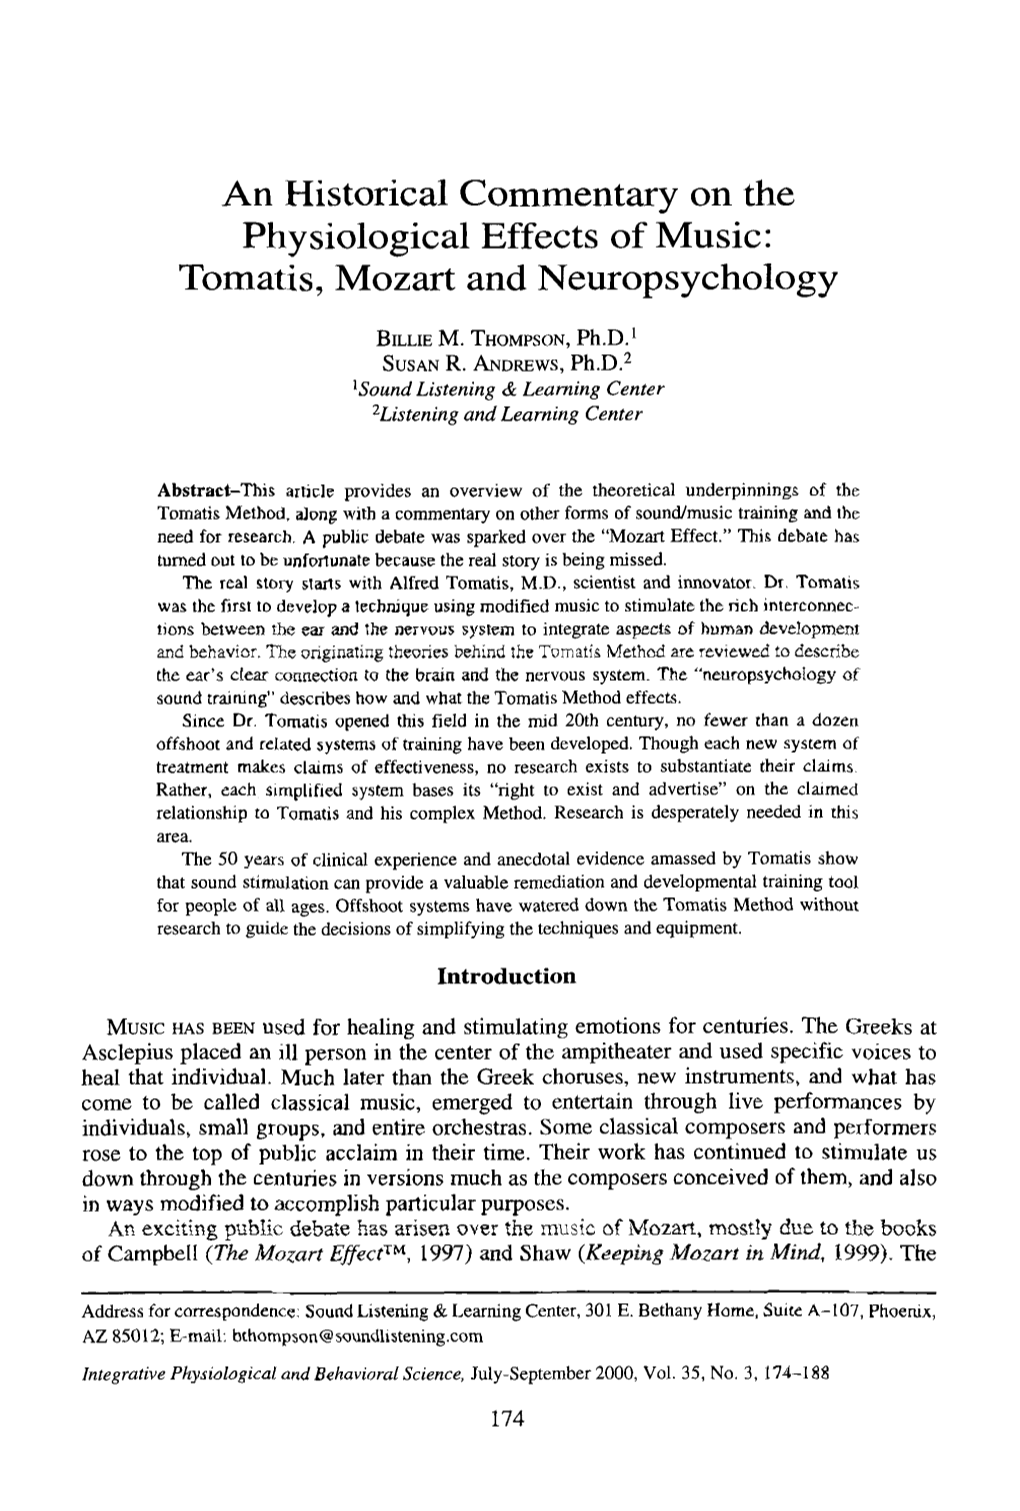 Tomatis, Mozart and Neuropsychology